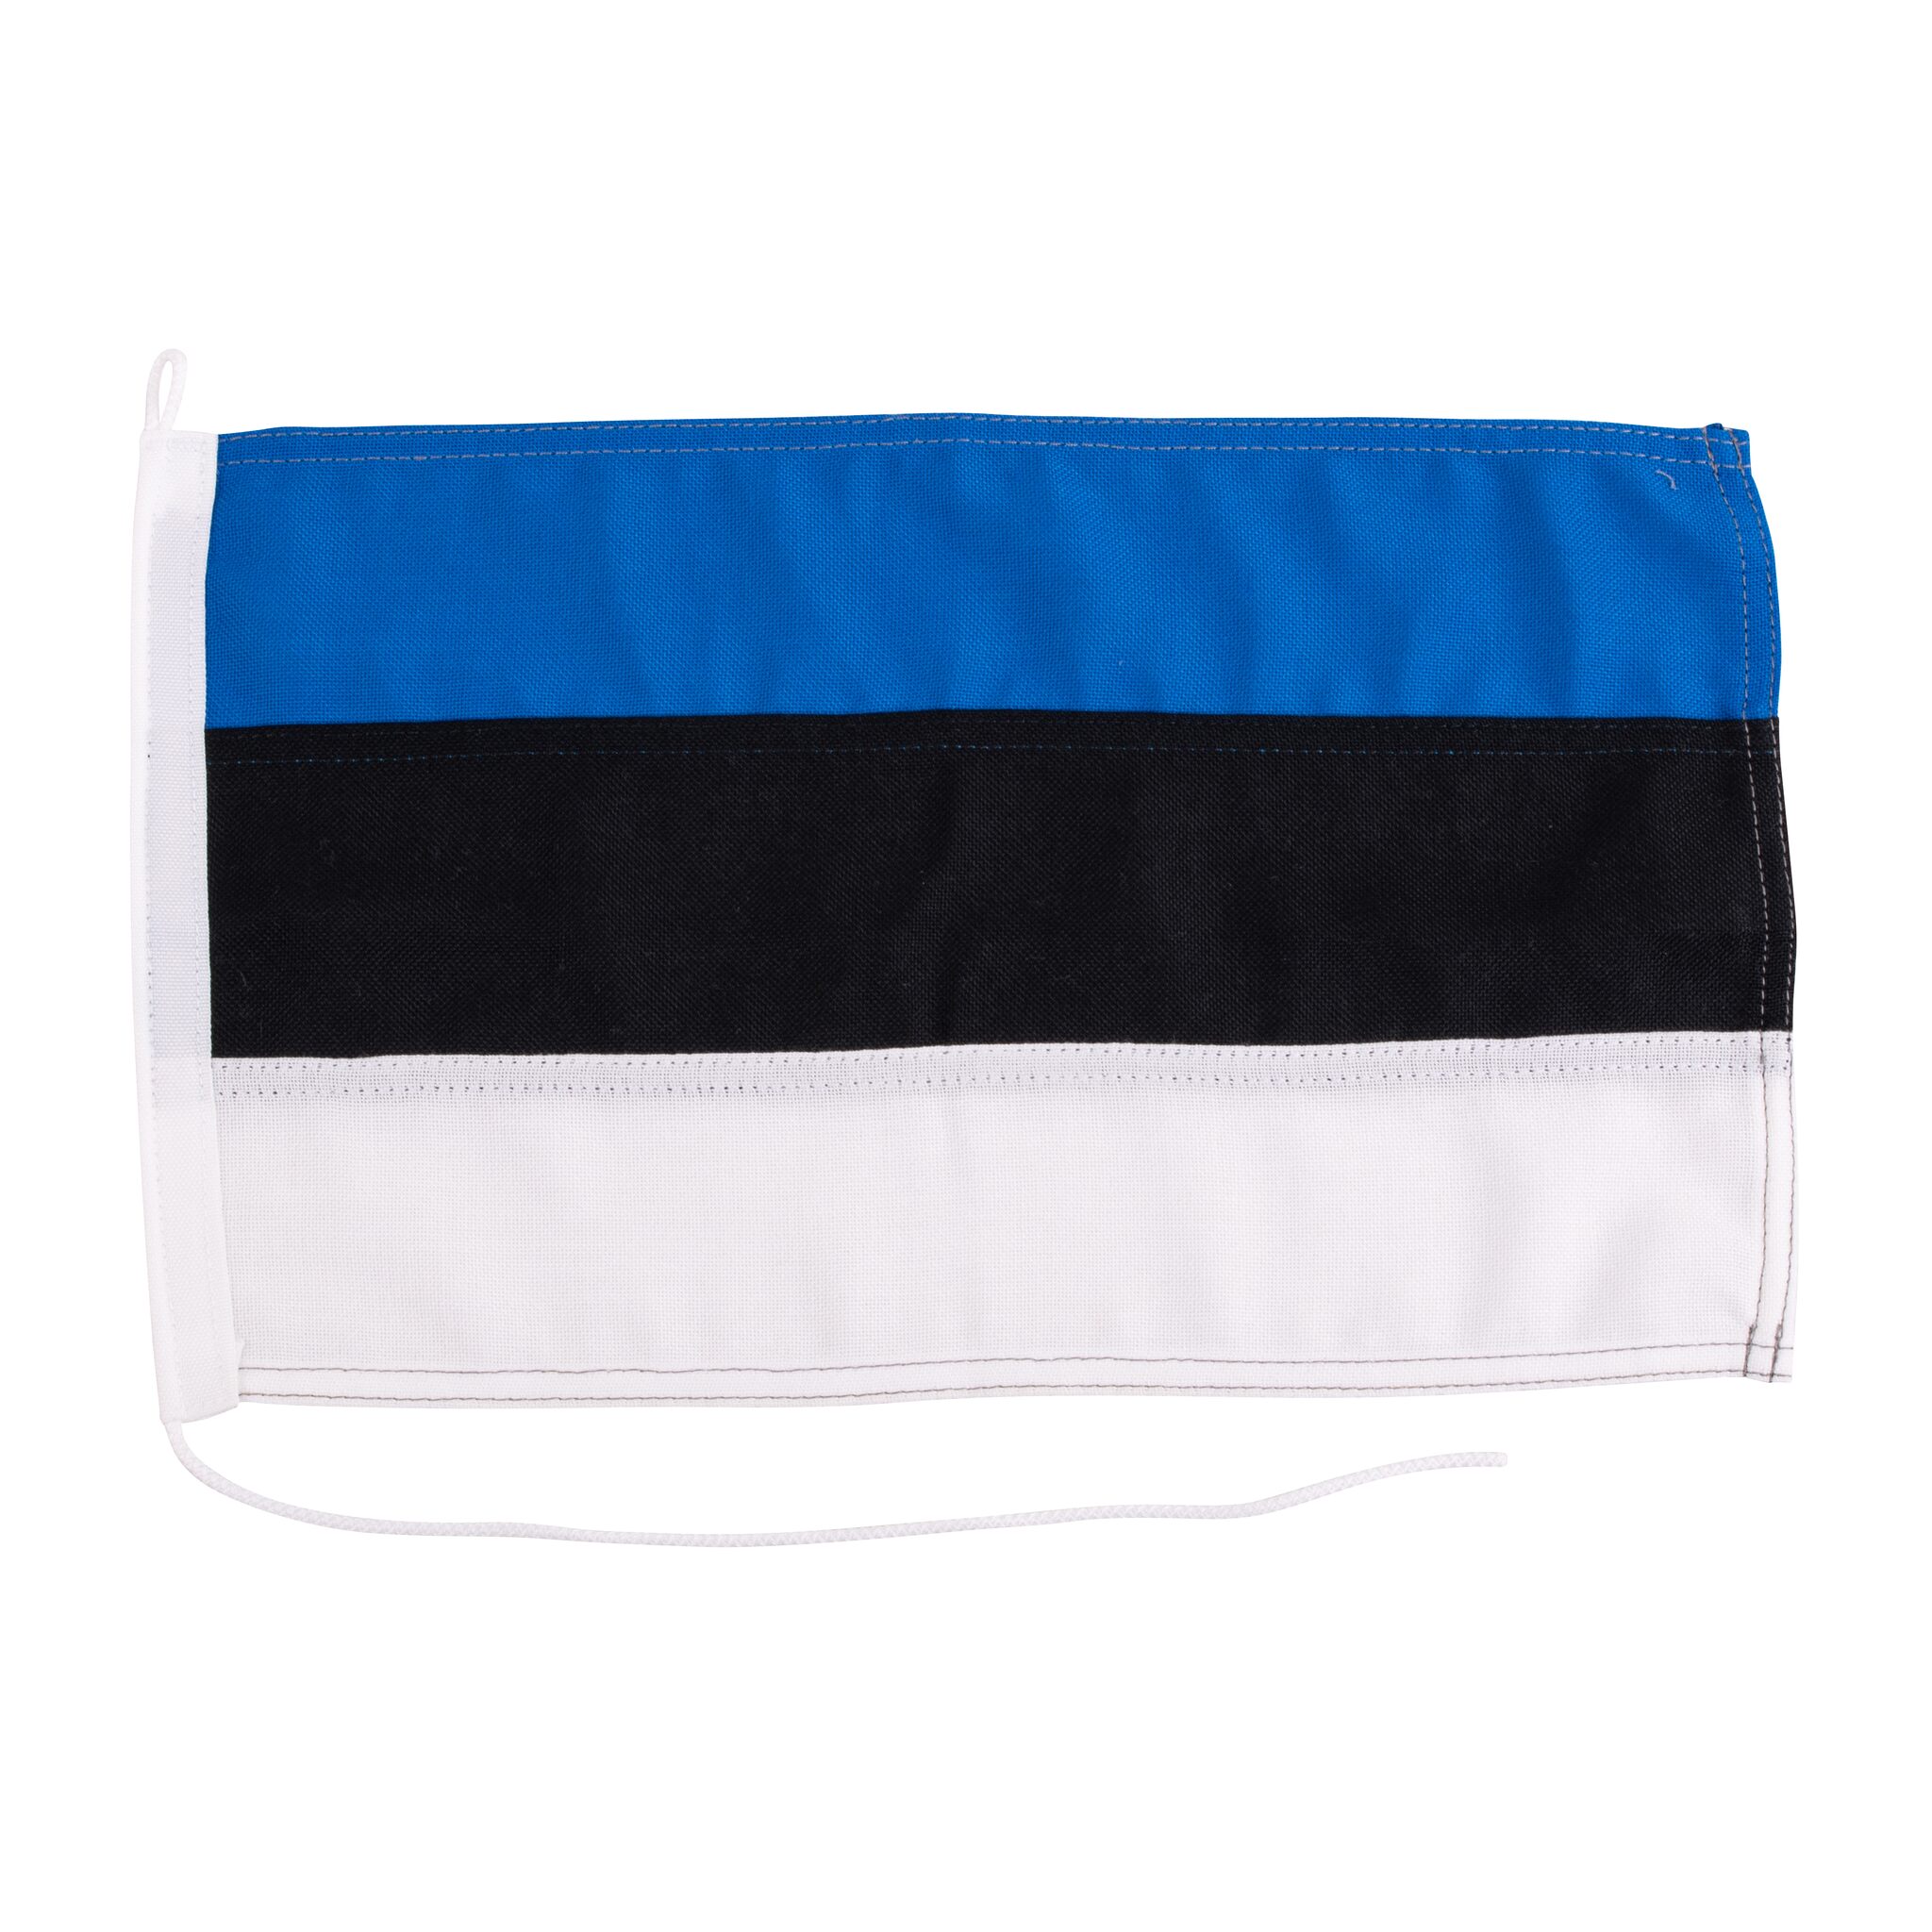 Gastlandflagge Estland